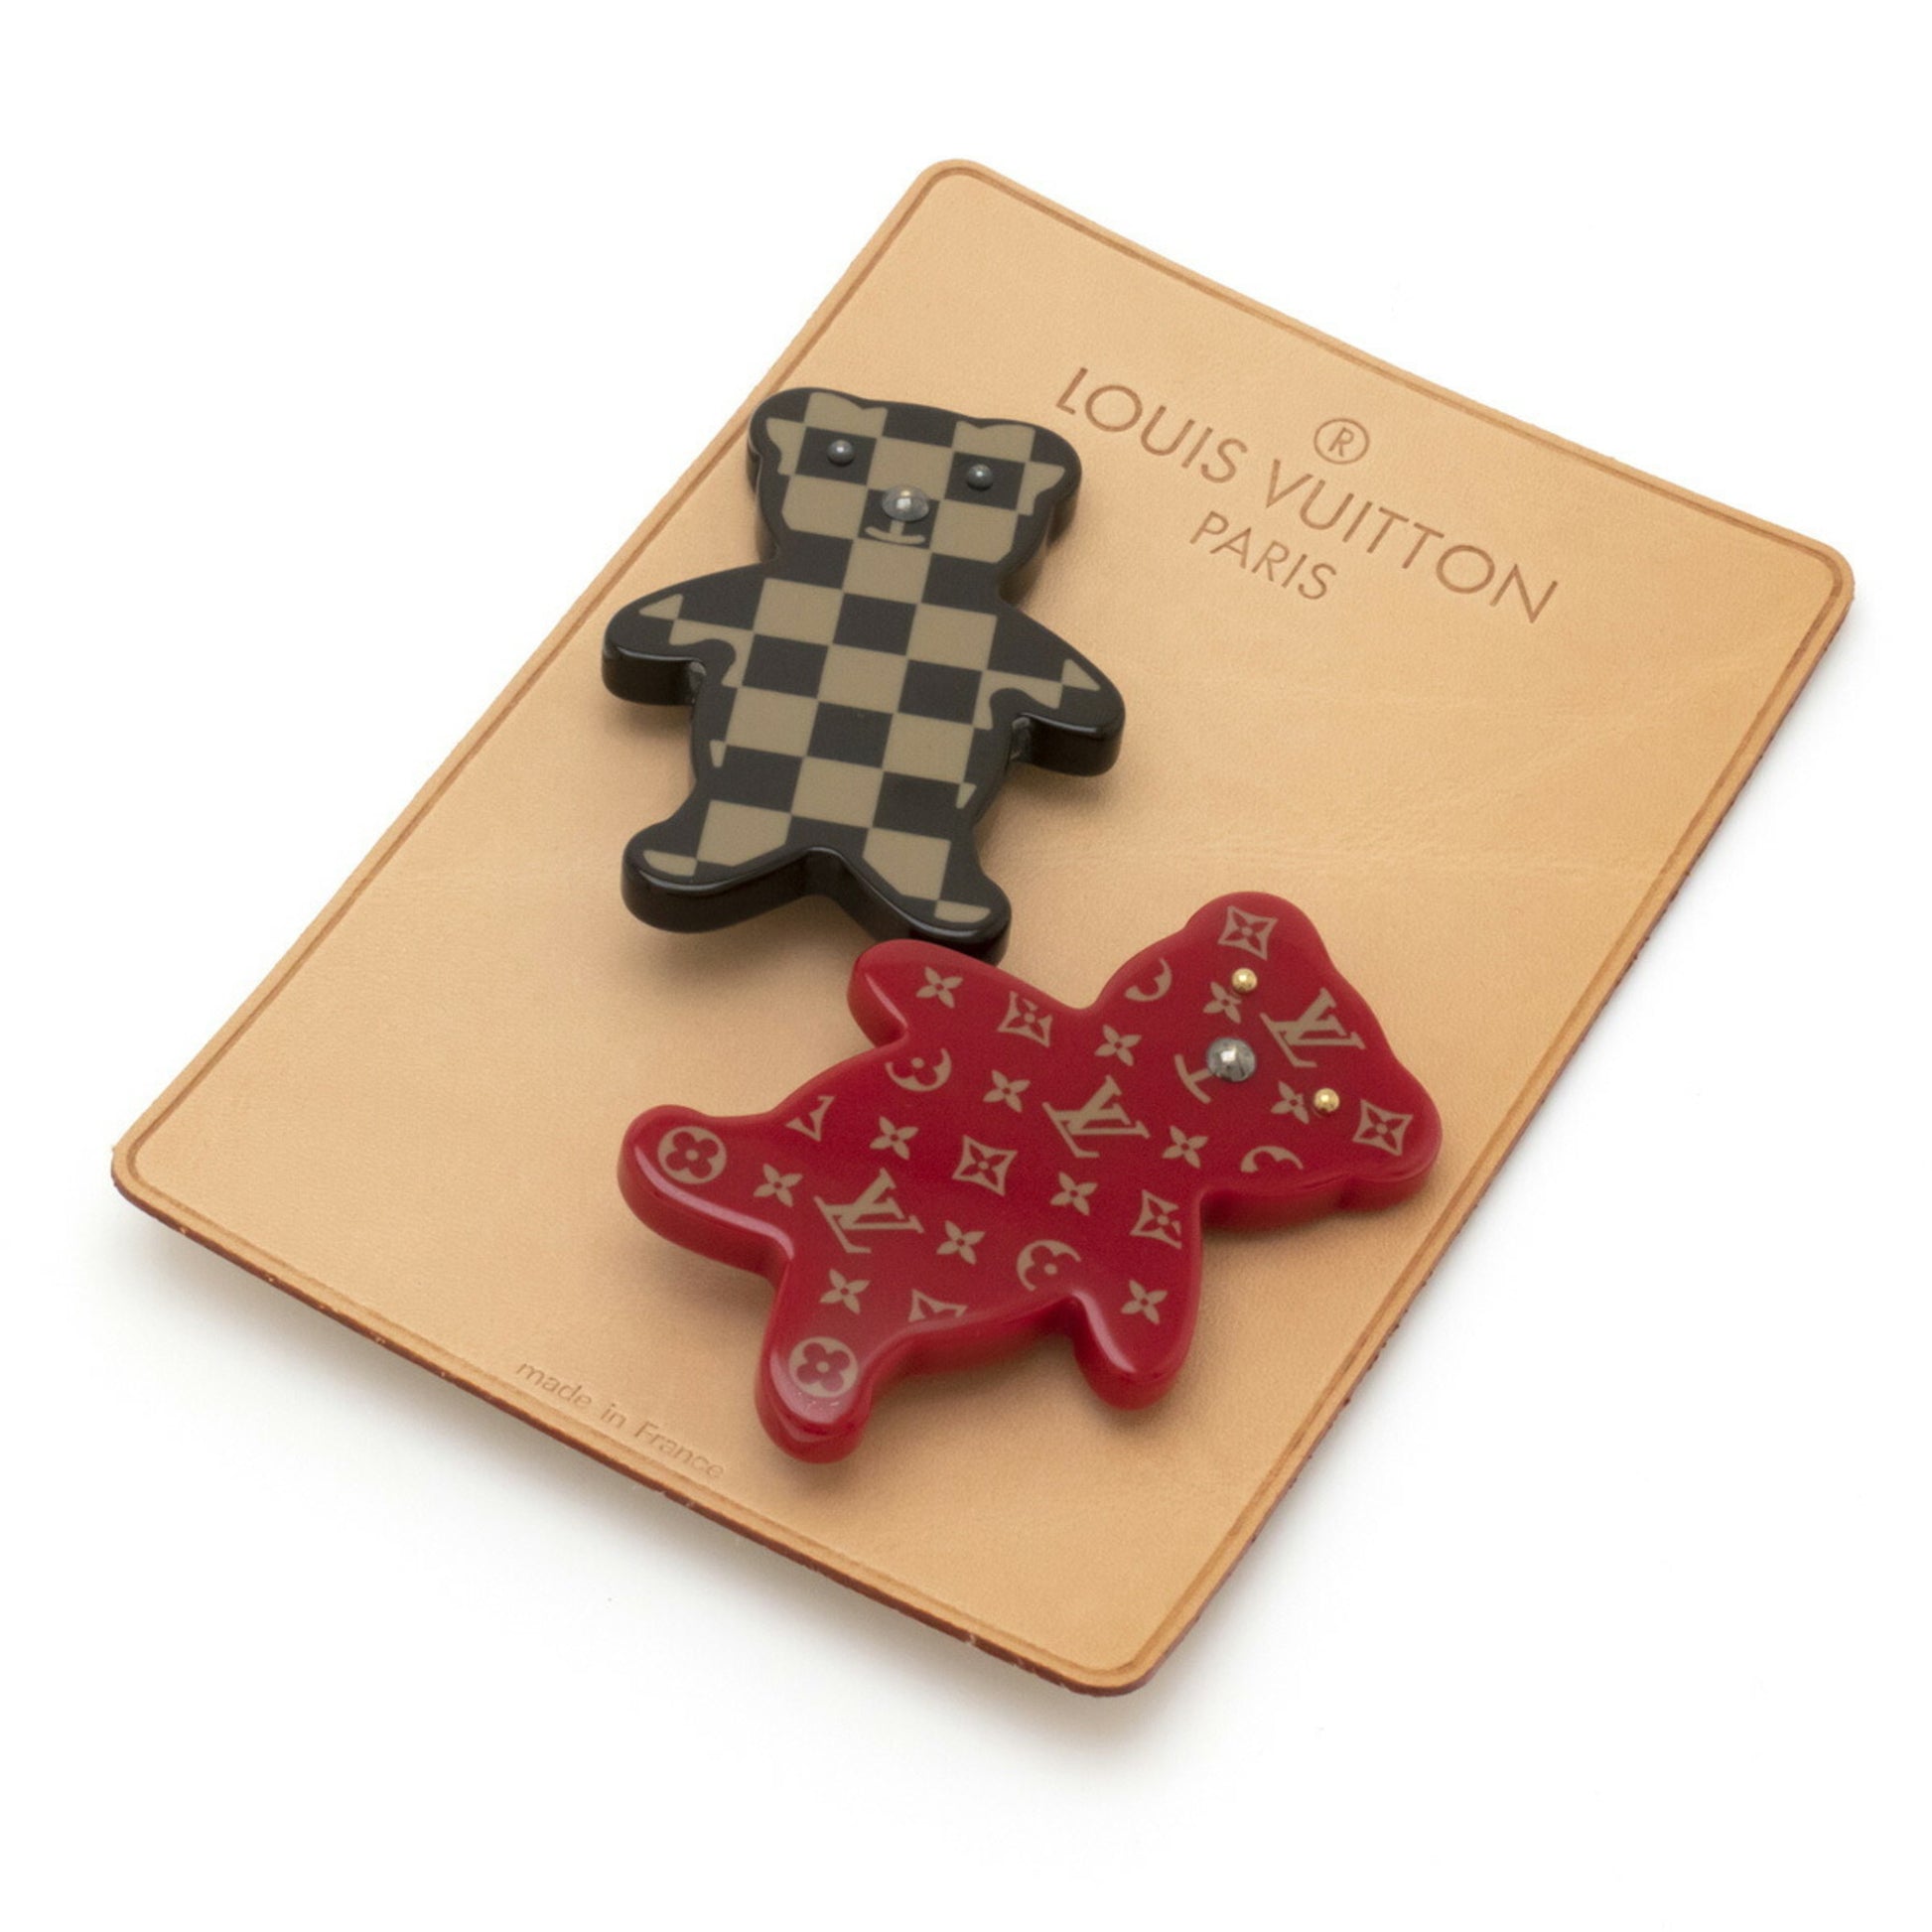 LOUIS VUITTON Monogram Teddy Bear & Turtle Pins Brooches Set Unused!!